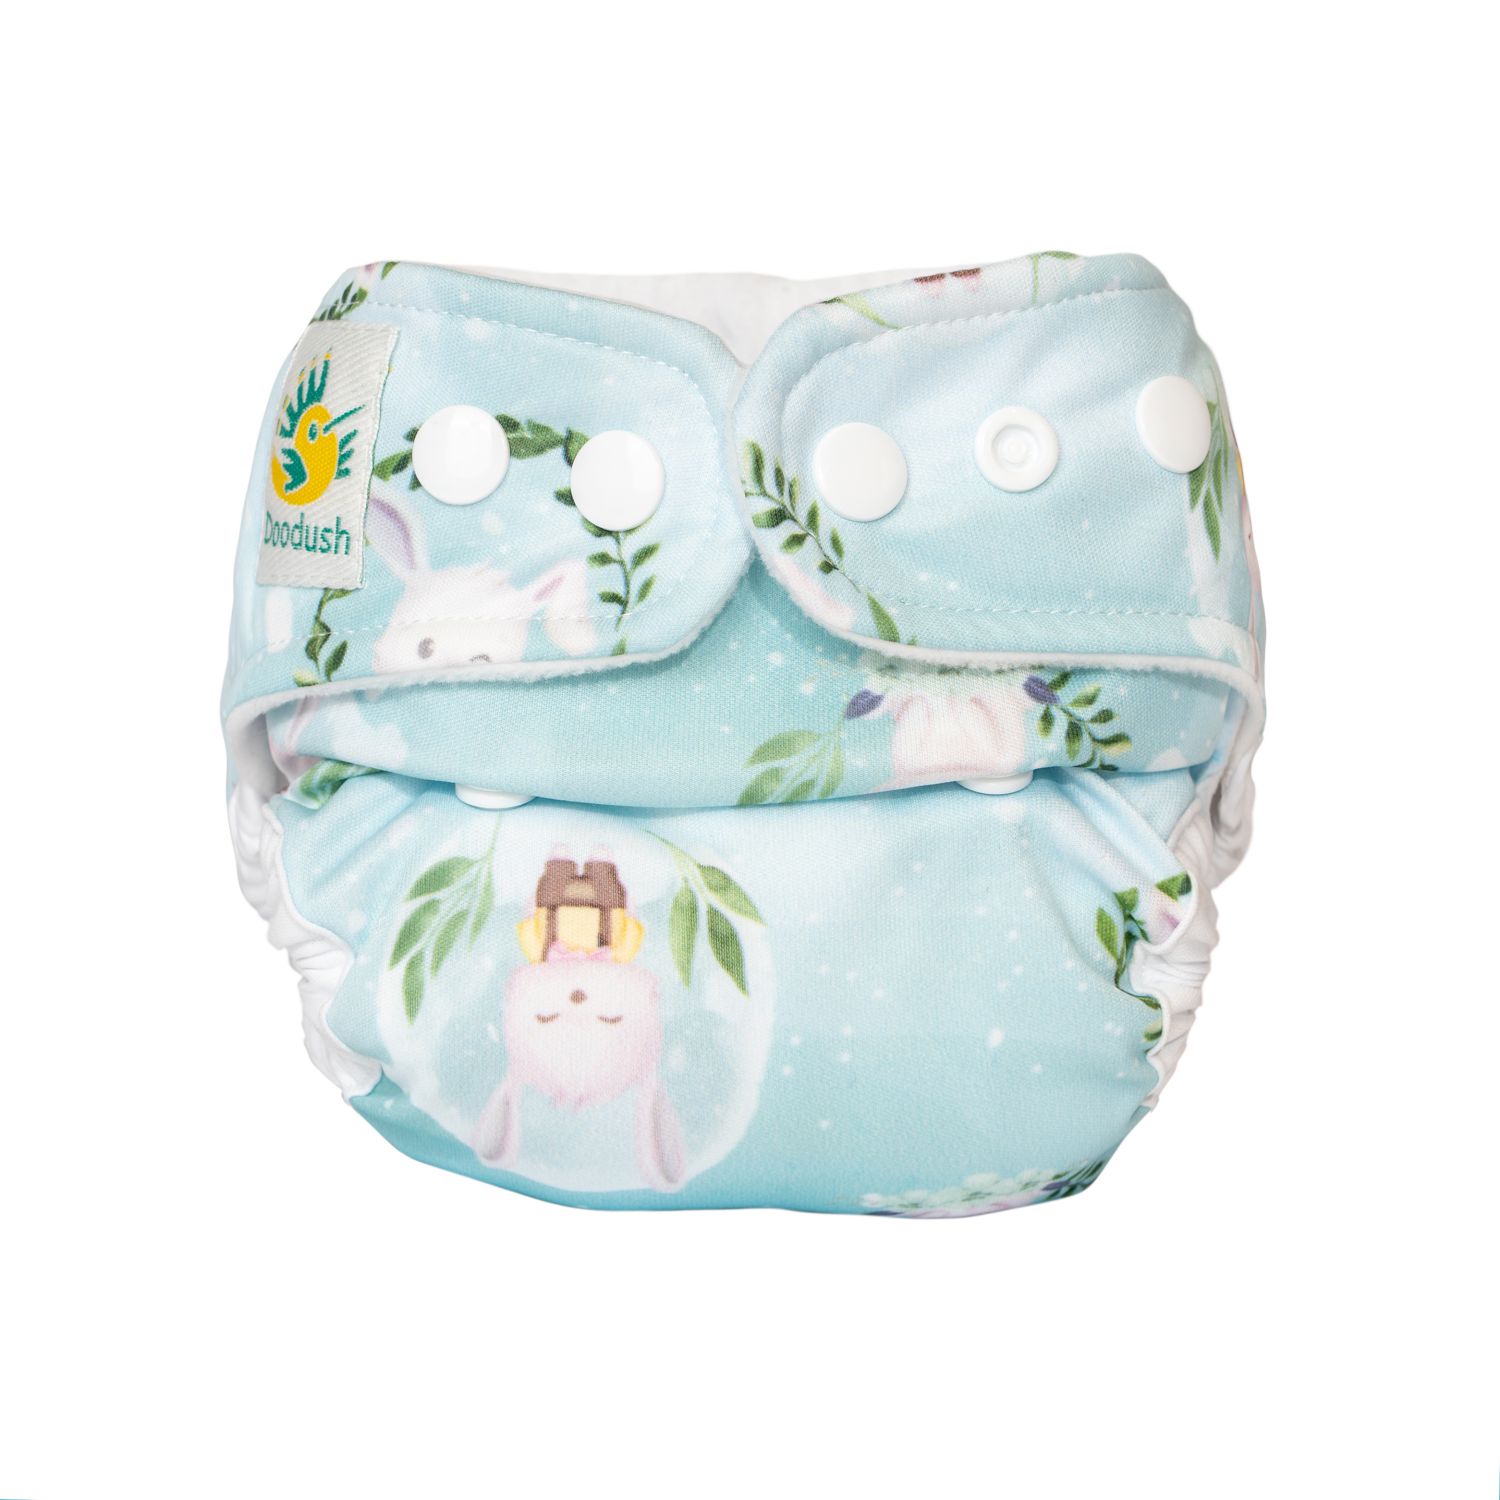 Doodush Newborn Diaper Cover Doodush pattern: Pastel Bunnies